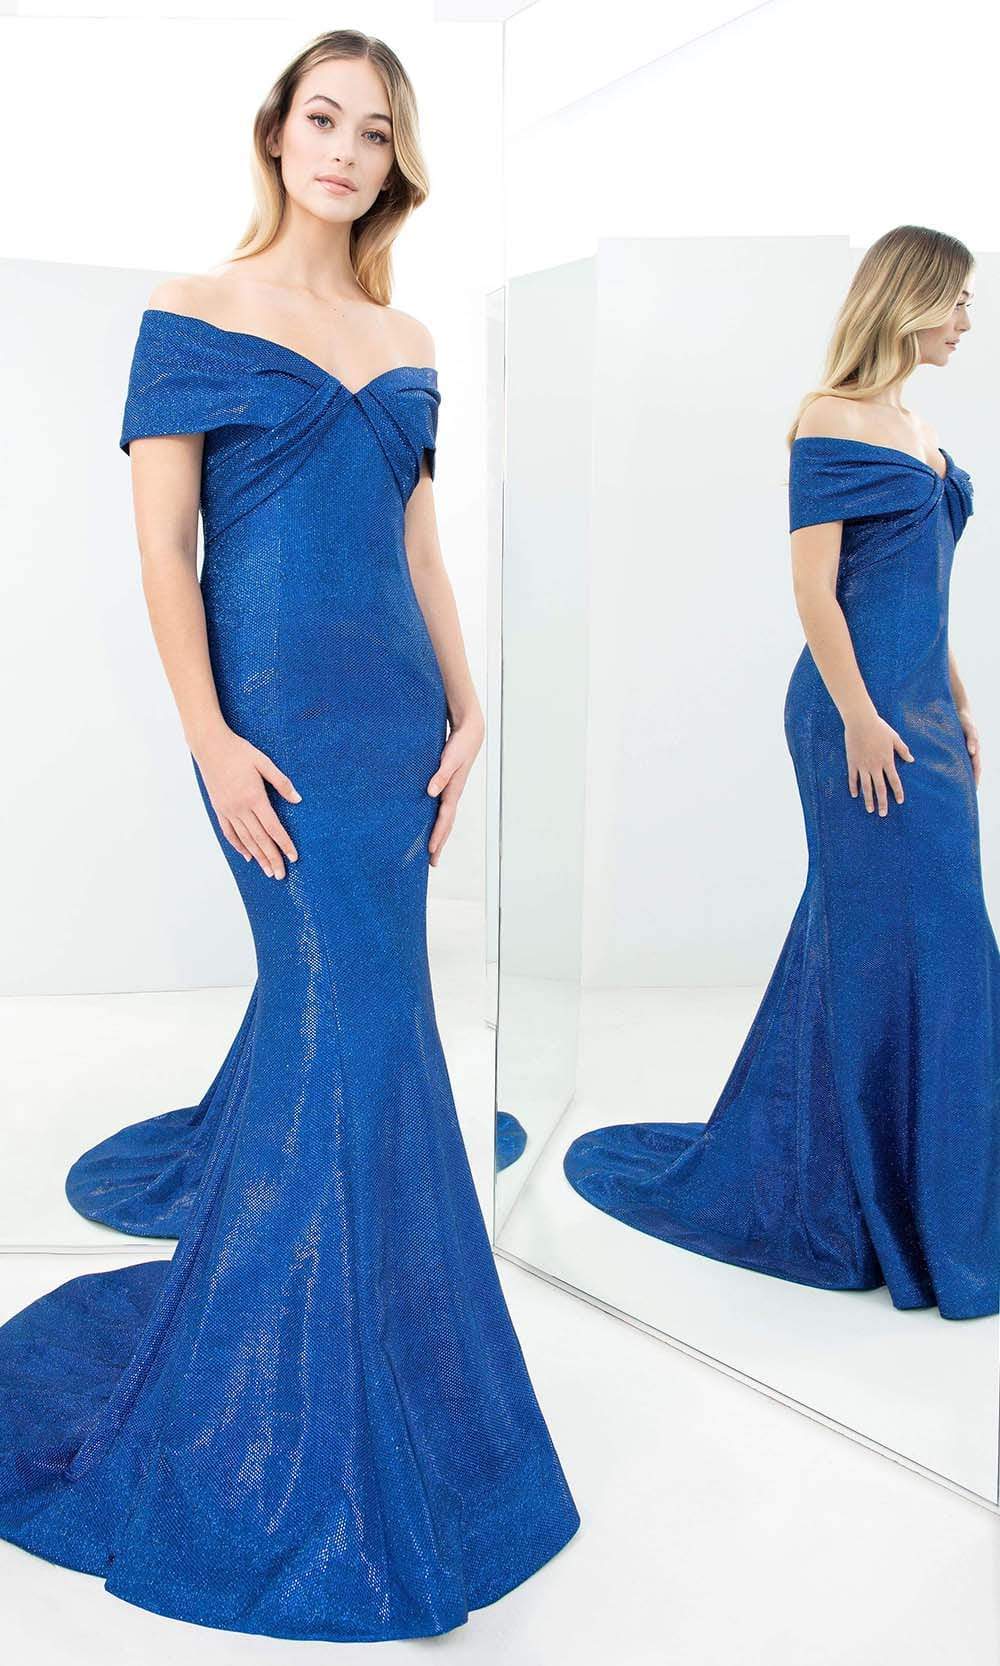 Alexander By Daymor - 1367 Textured Fabric Shiny Trumpet Dress Evening Dresses 00 / Blue